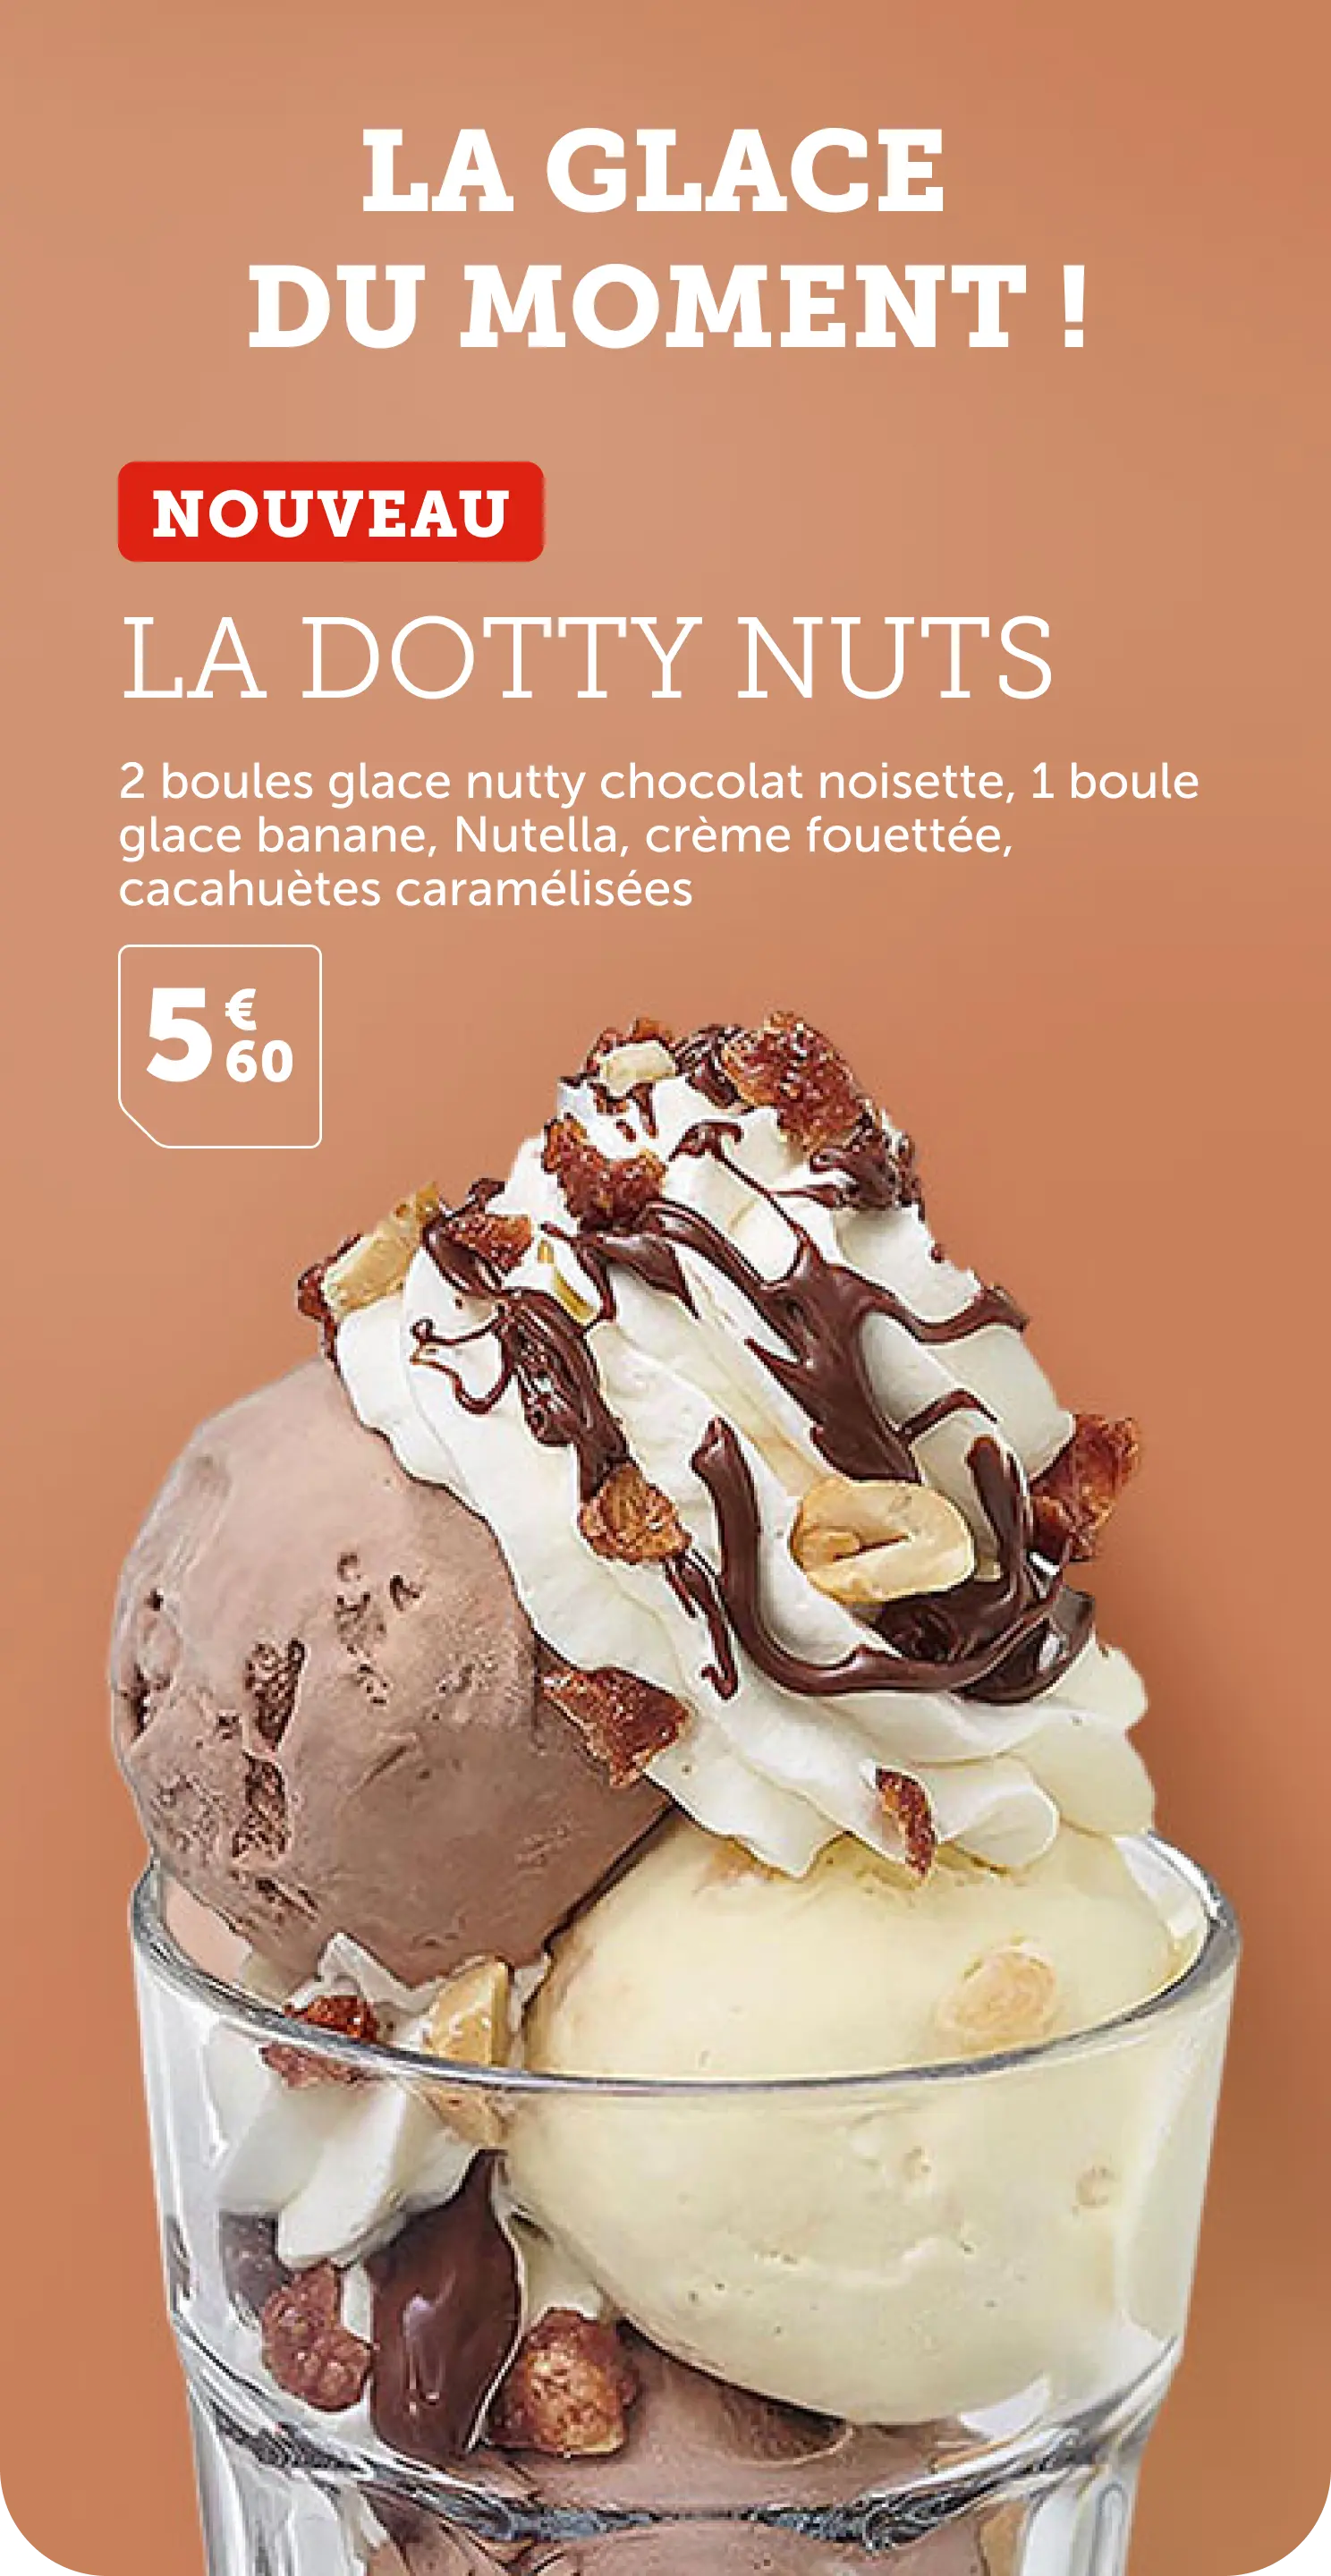 La dotty nuts à 5€60